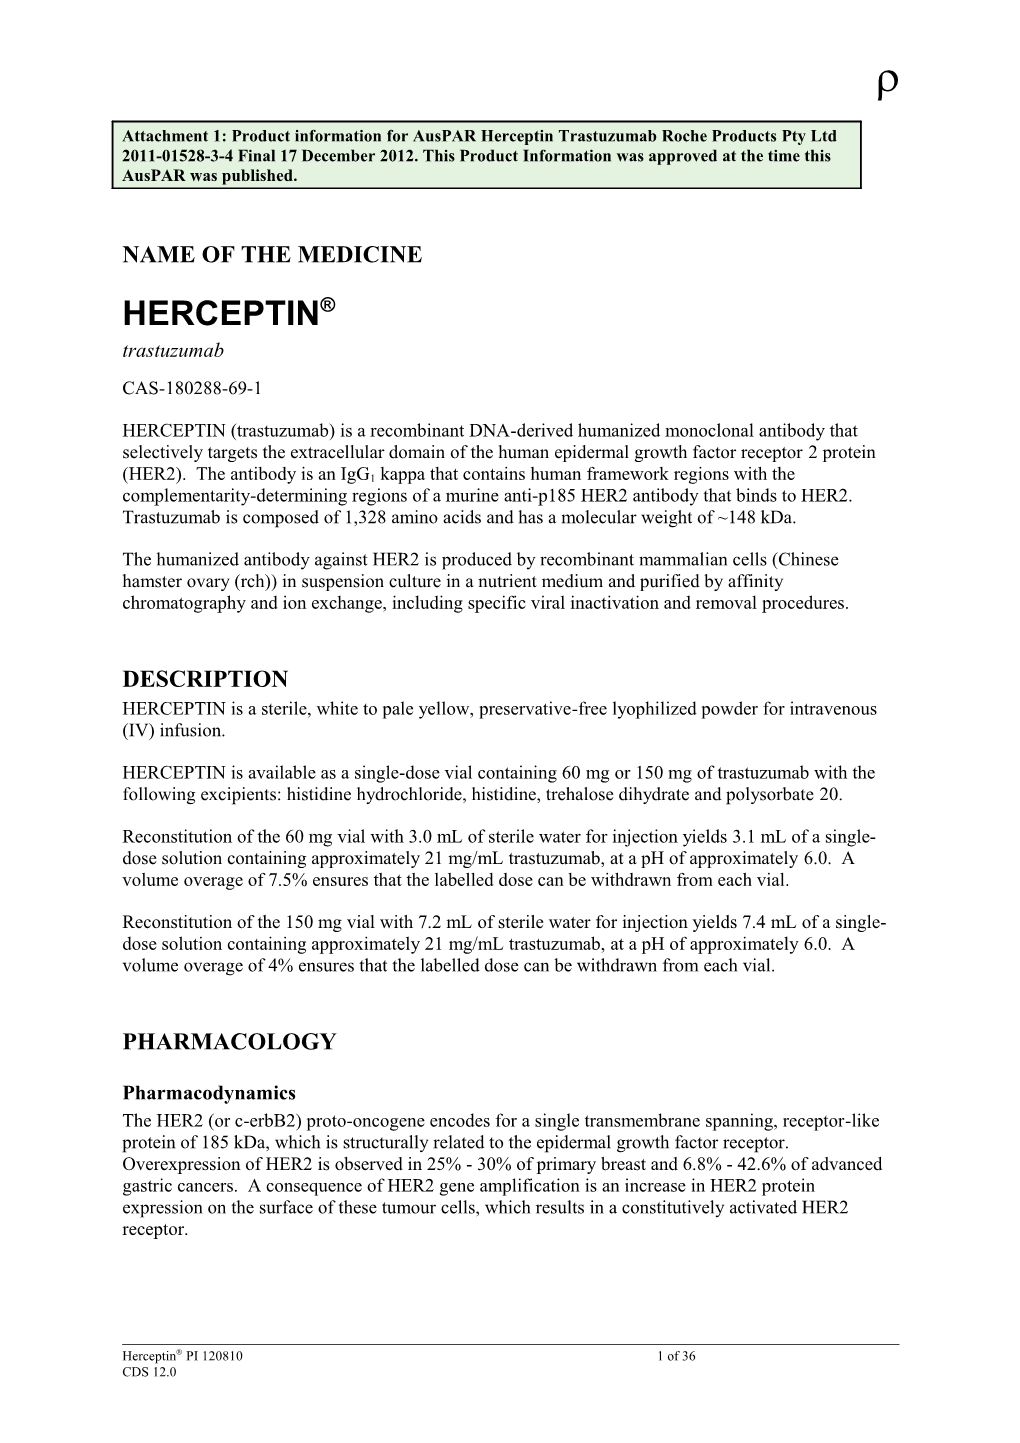 HERCEPTIN - Product Information